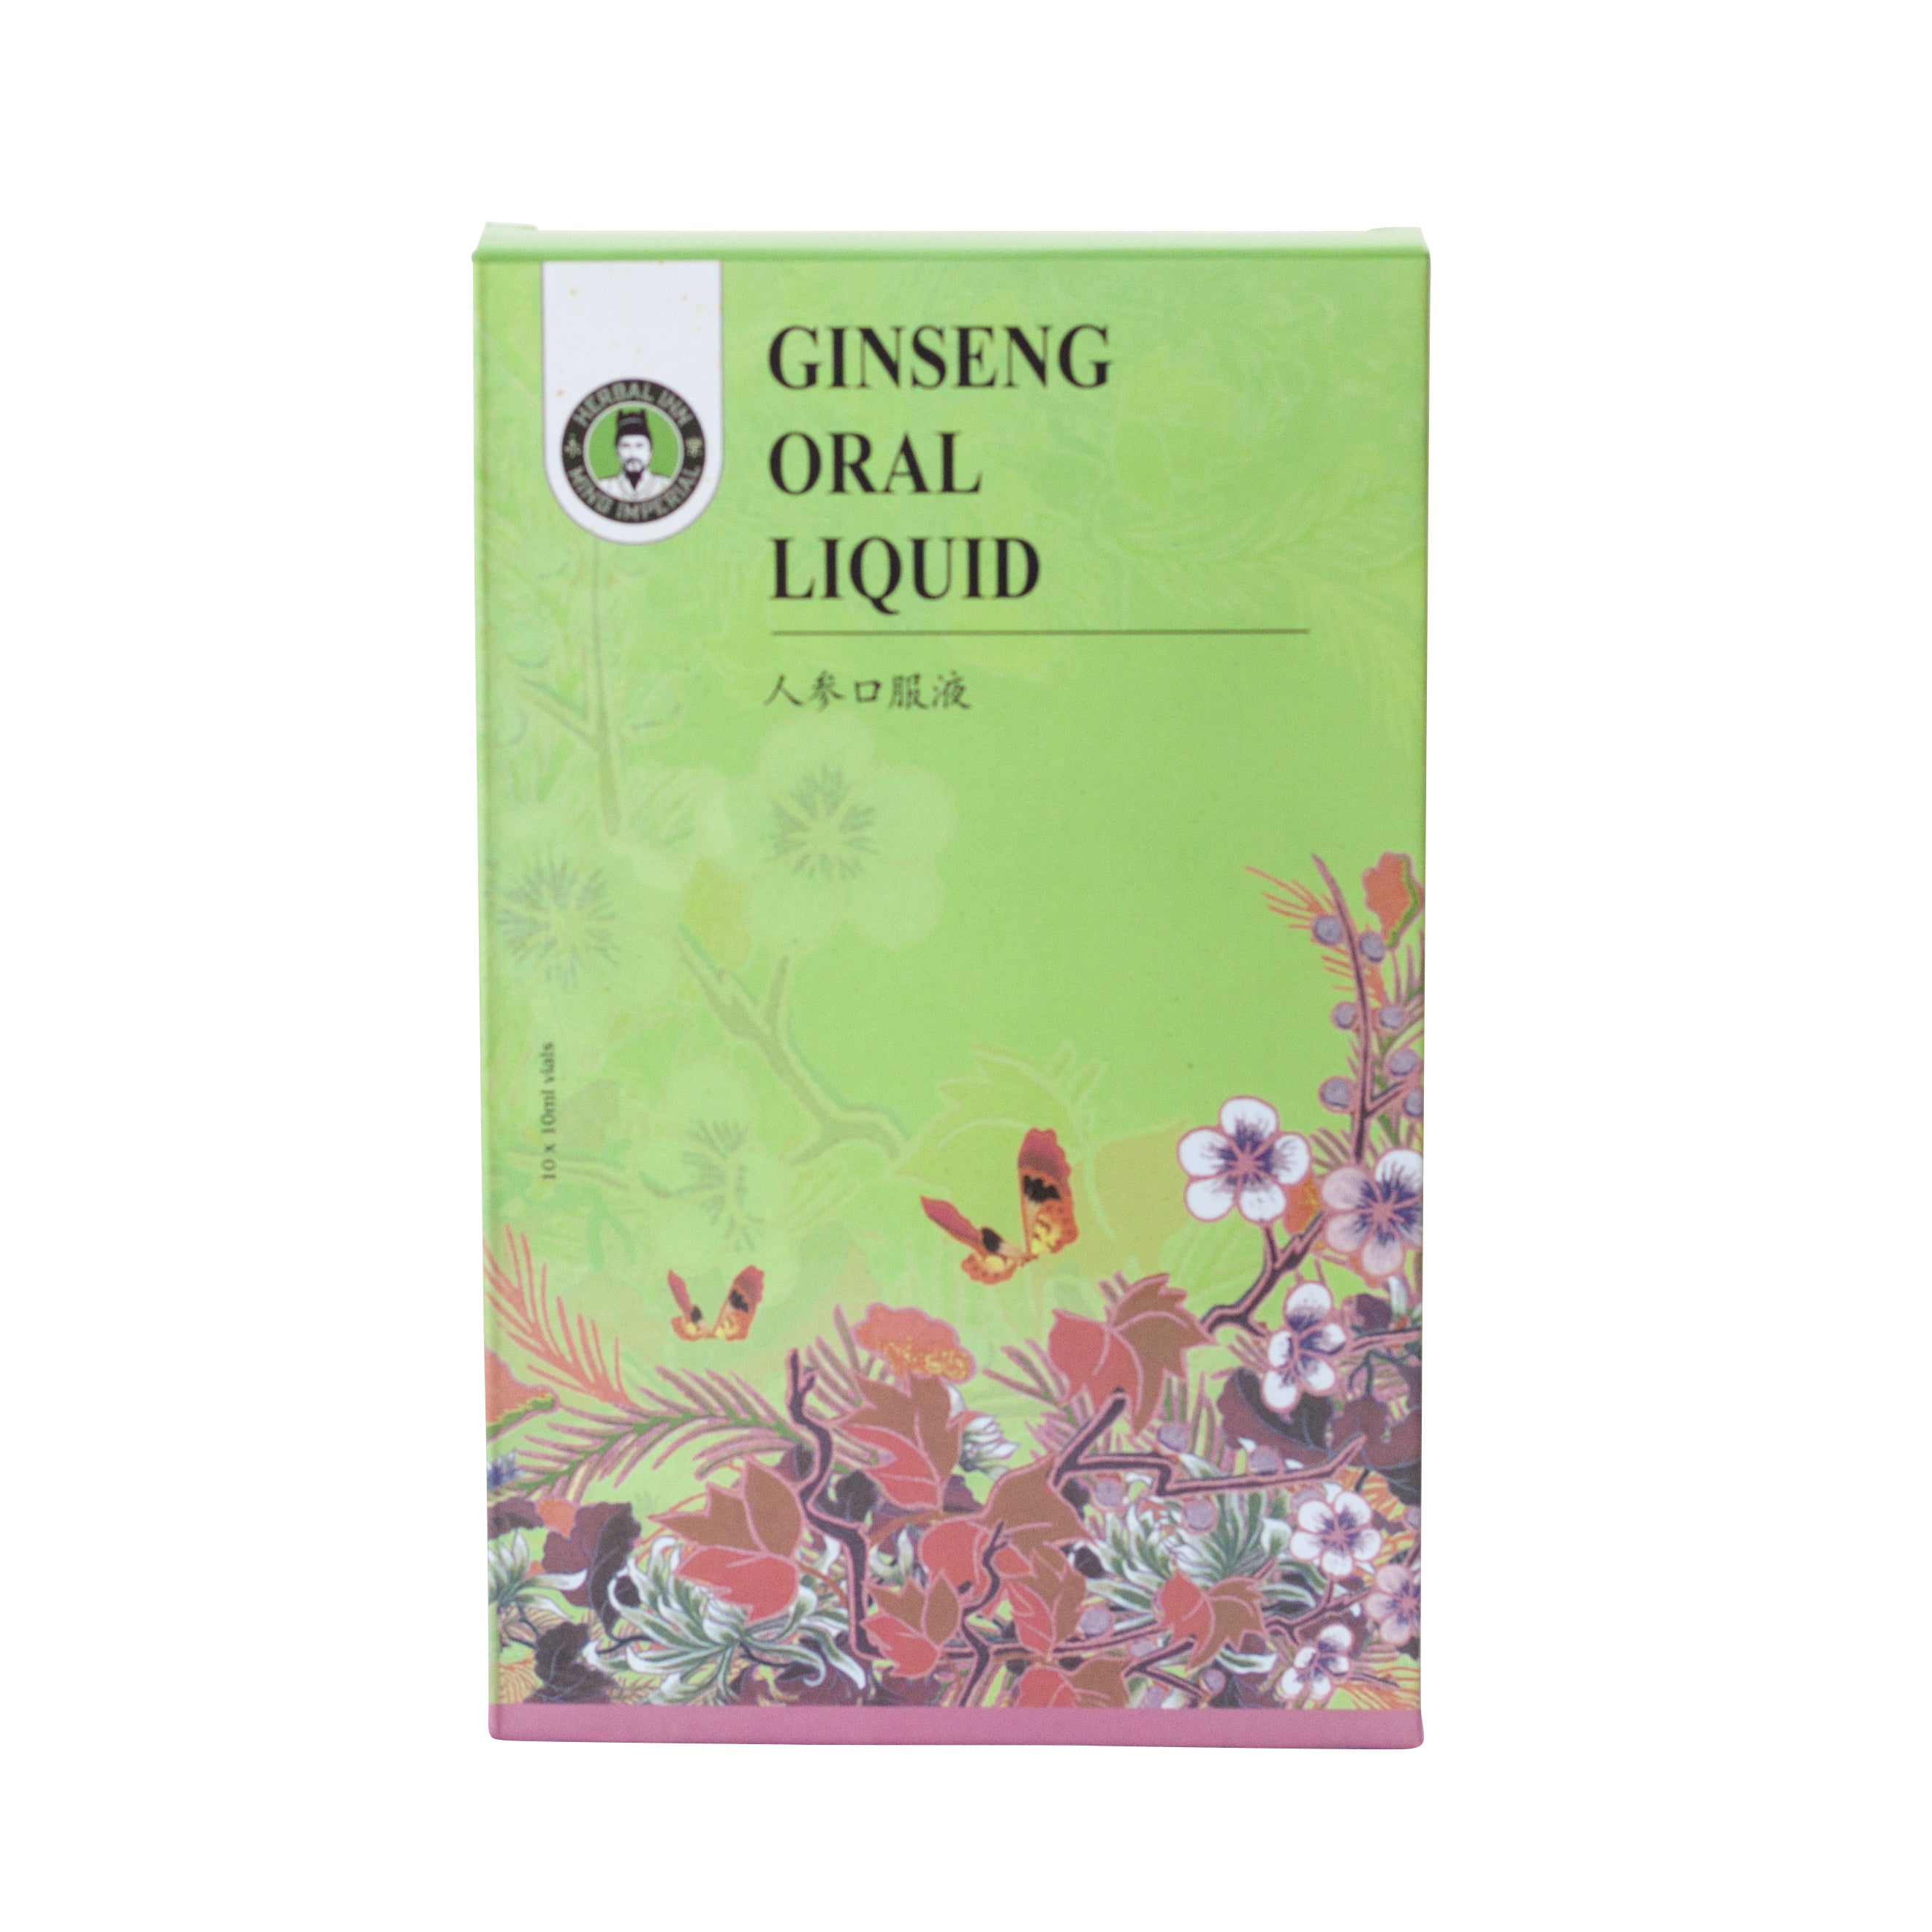 Ginseng Oral Liquid